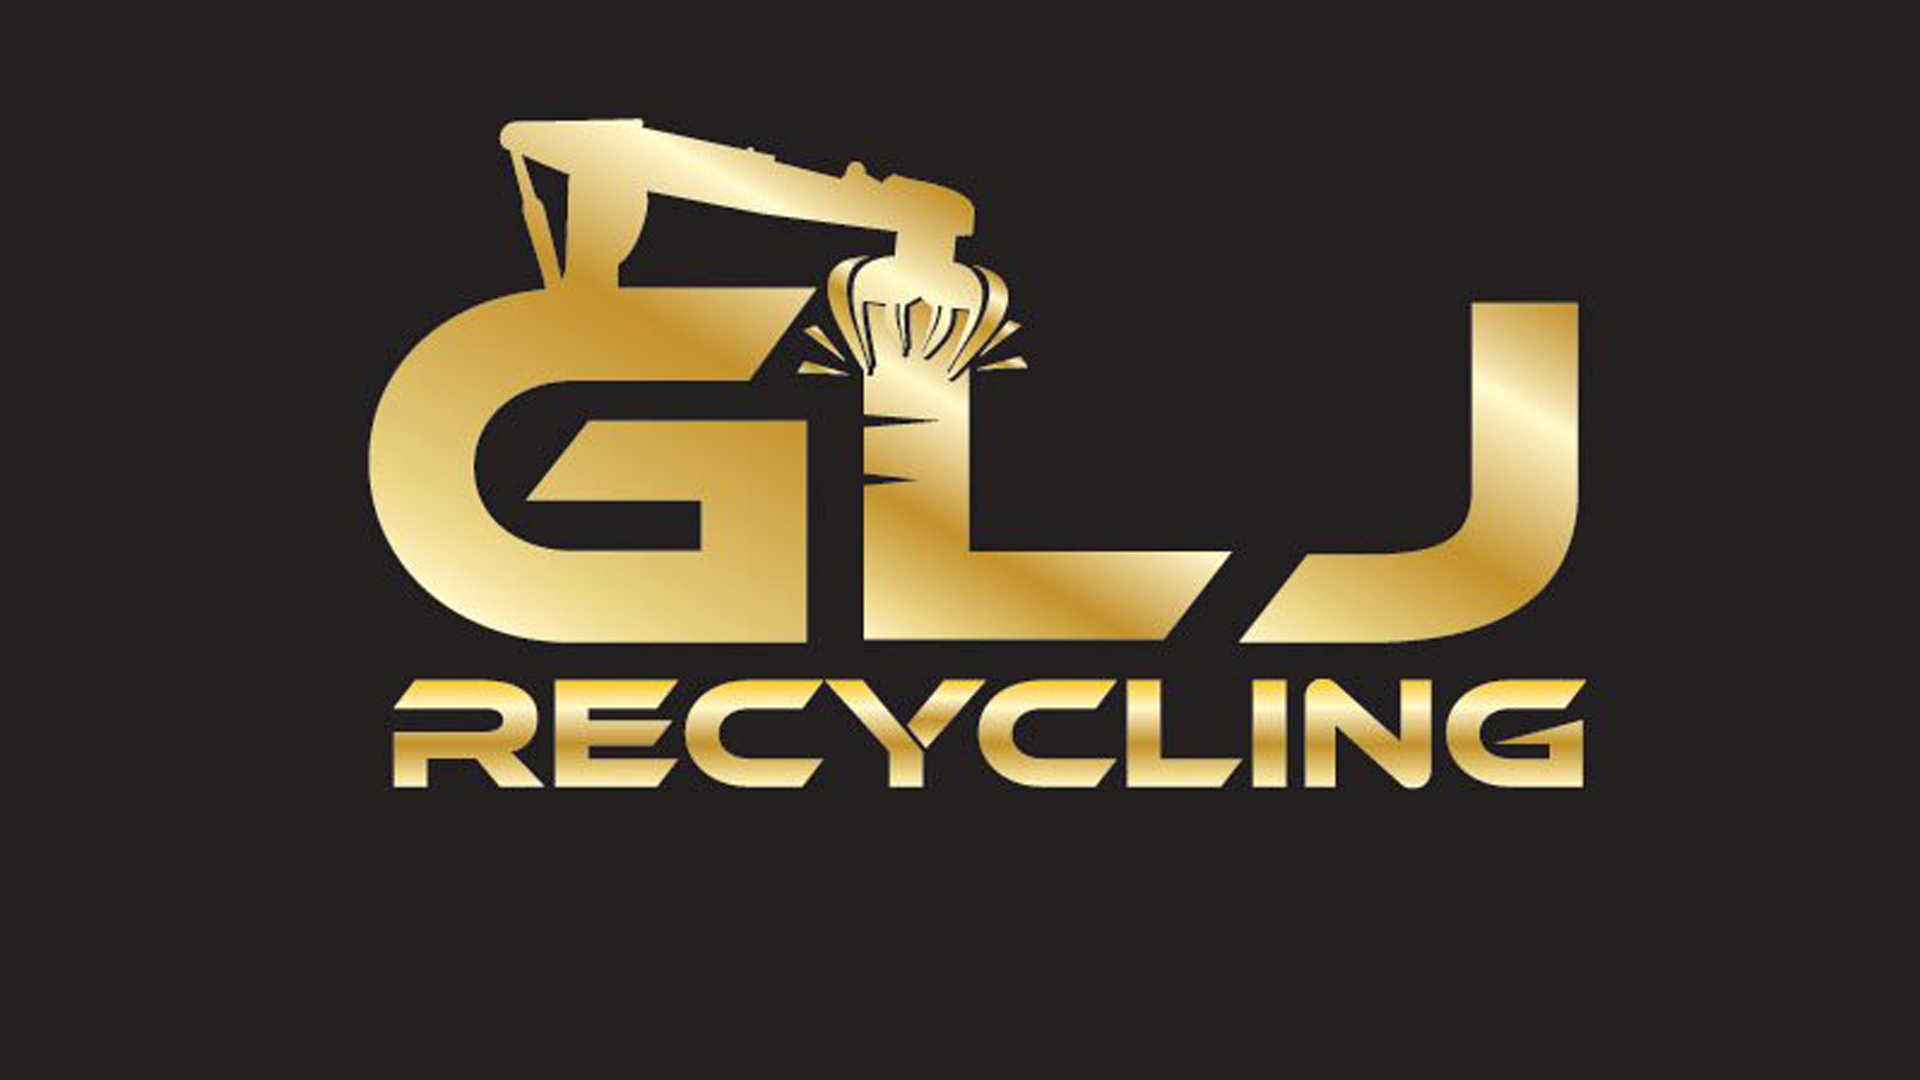 GLJ Recycling